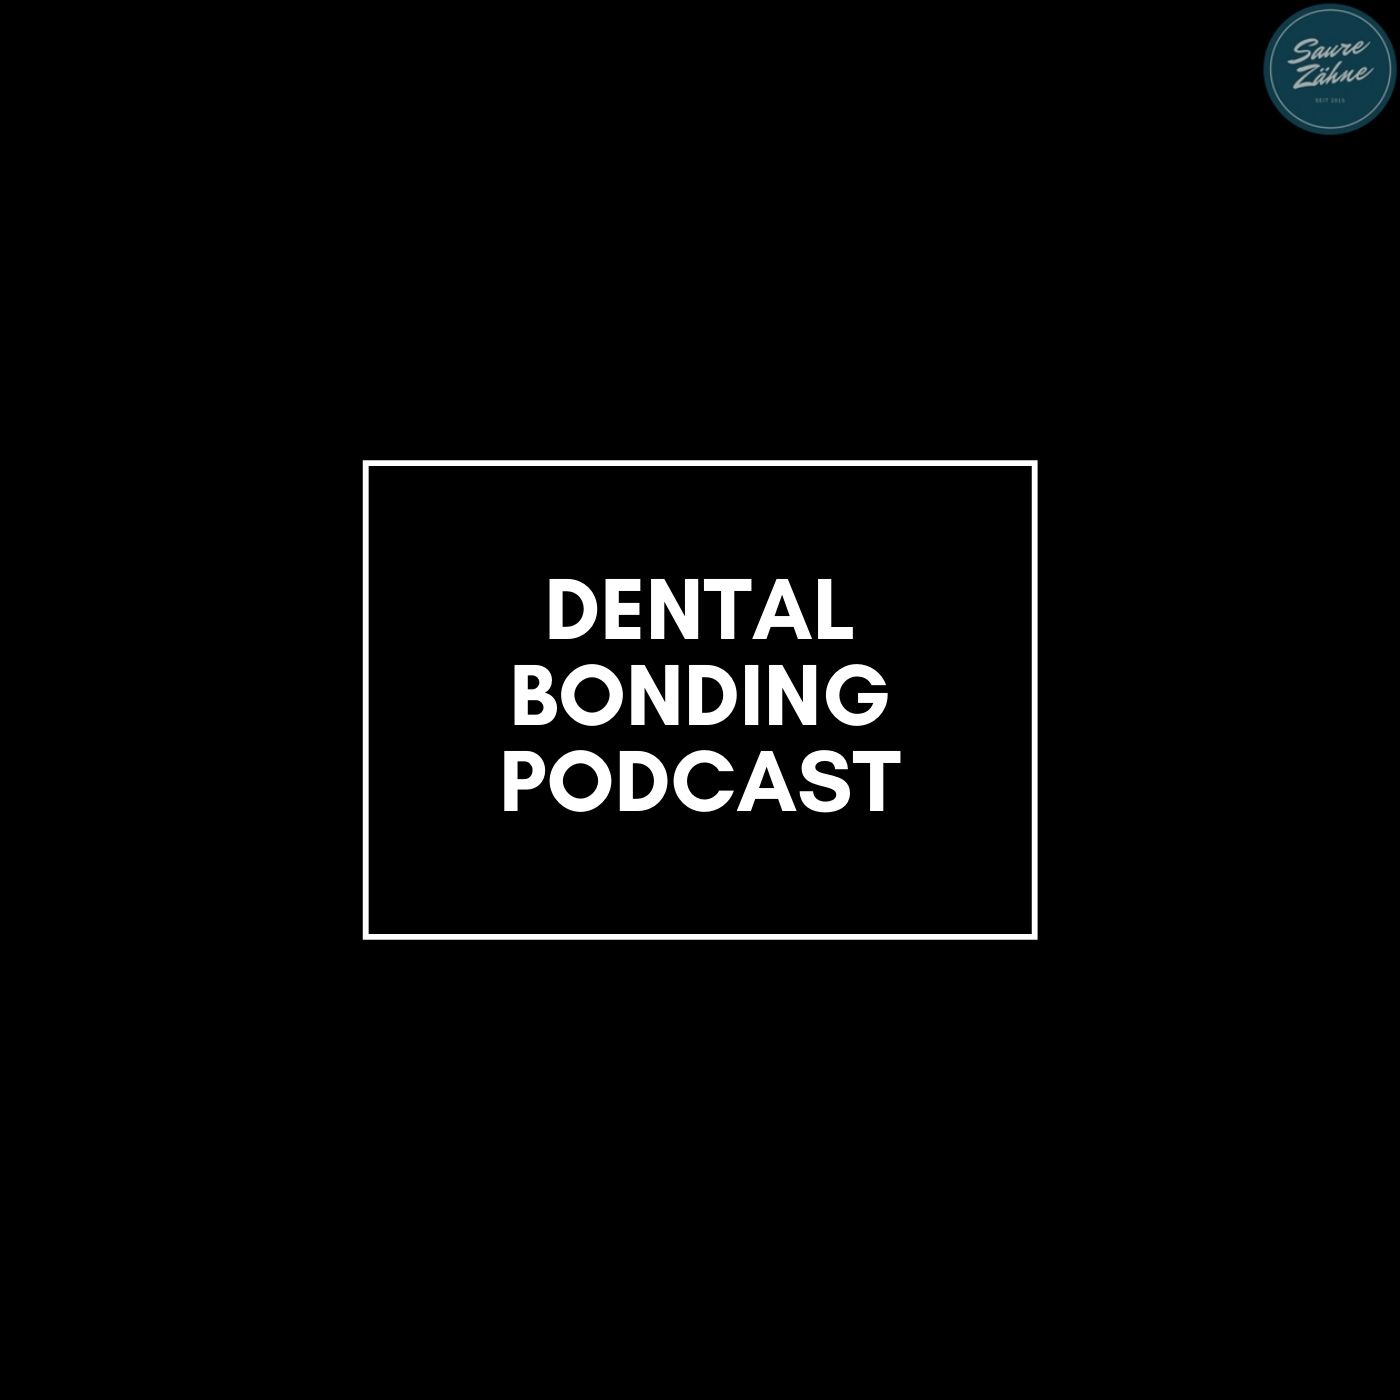 Dental Bonding - A clinical Dental Podcast